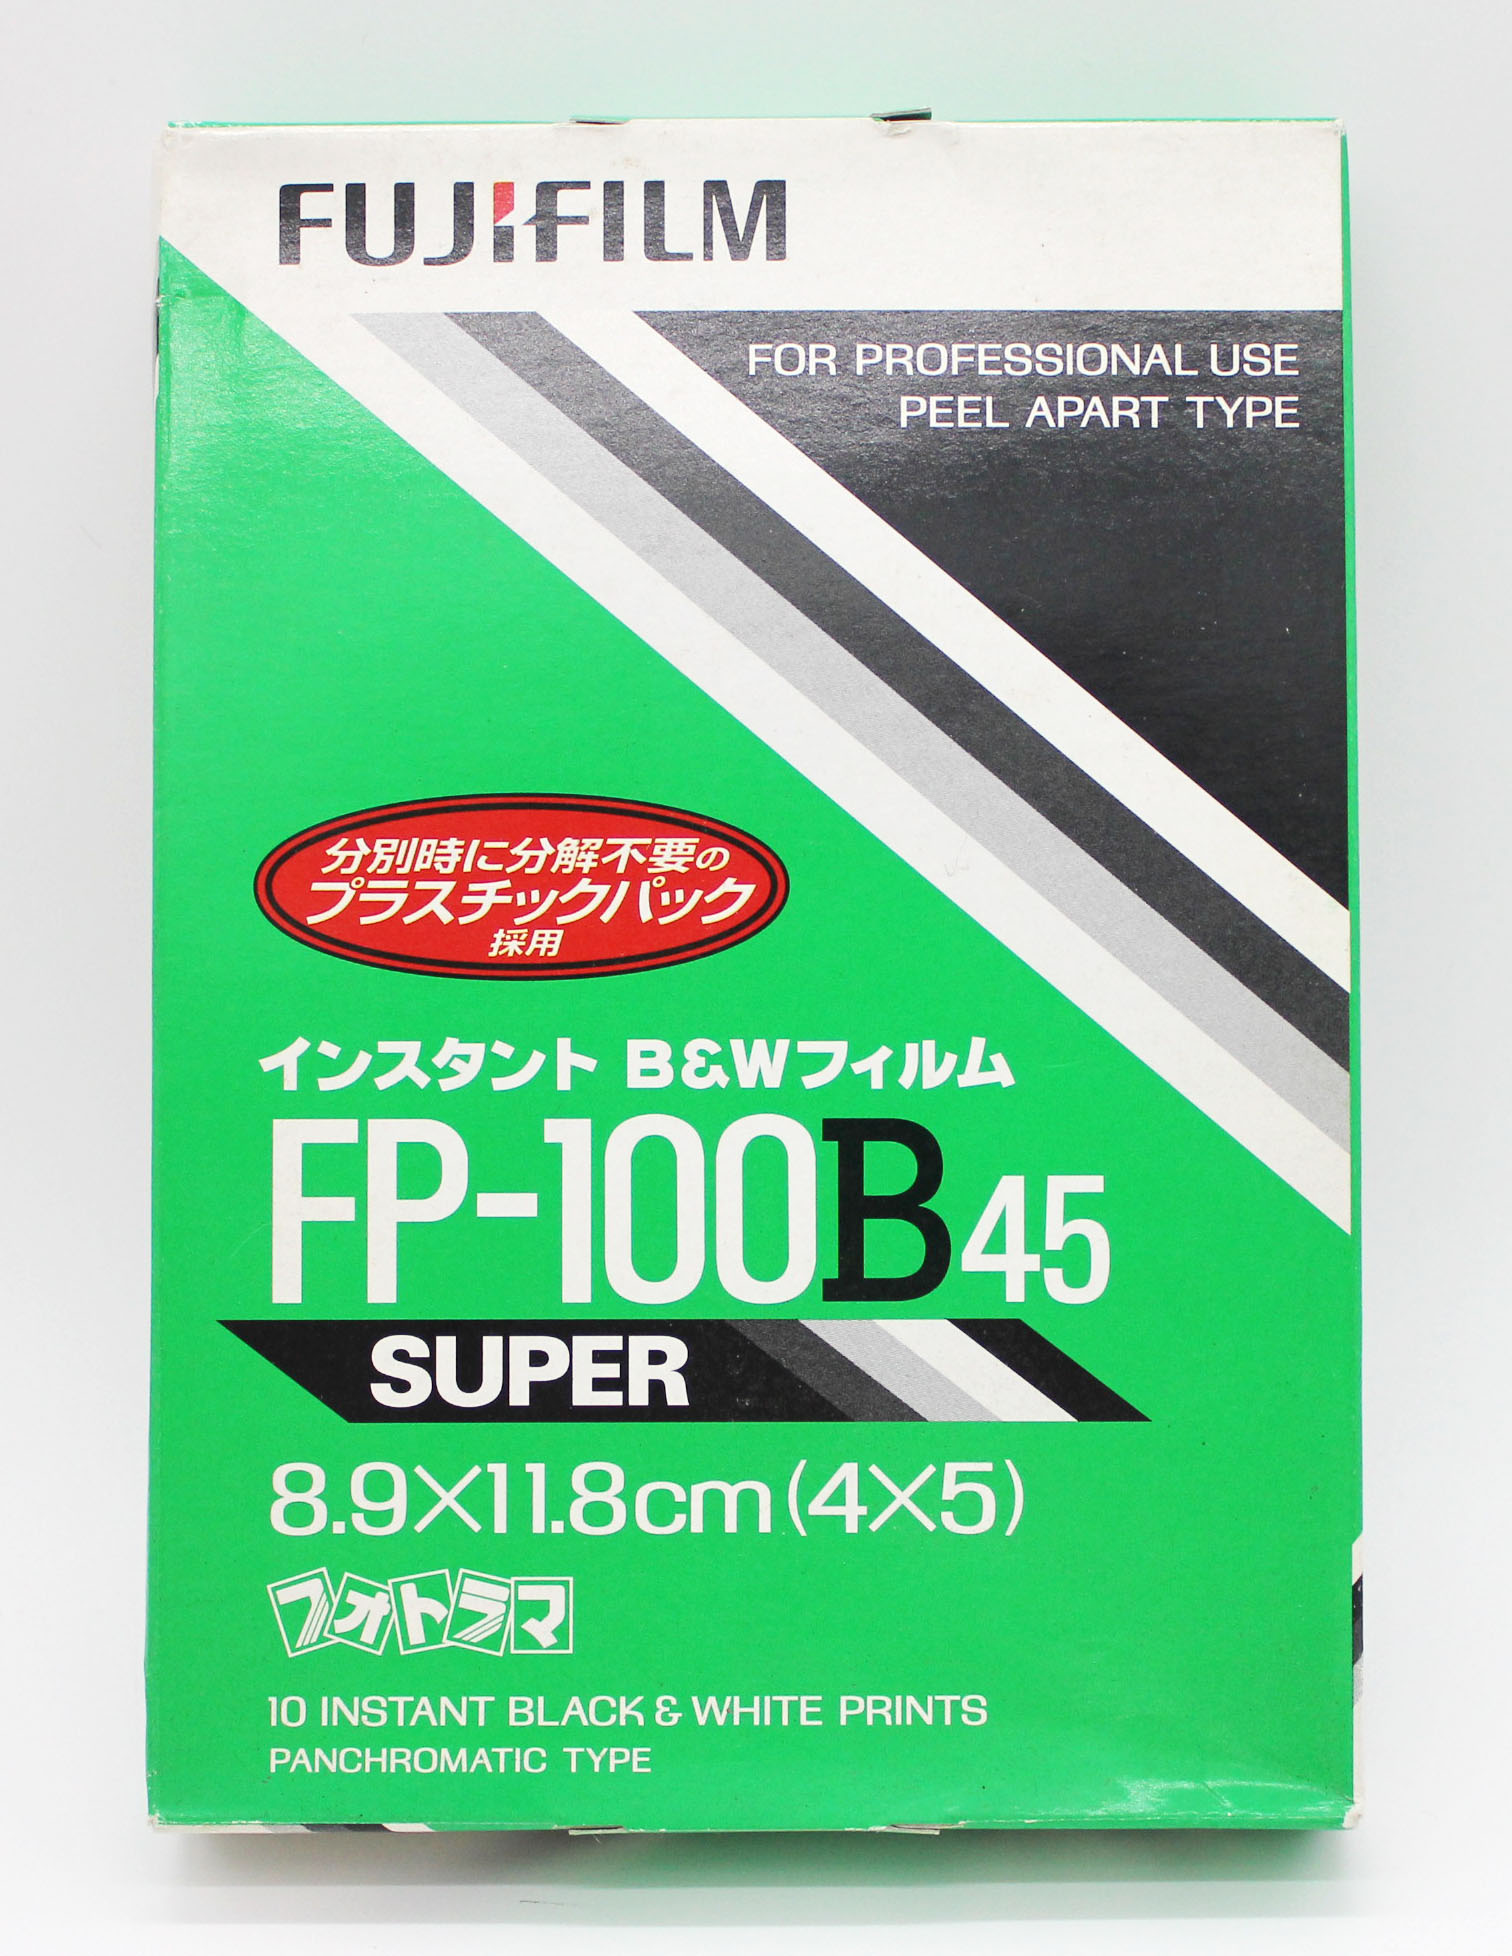  Fuji Fujifilm FP-100B45 4x5 8.9x11.8cm Instant Black & White Film (EXP 6/2011) Photo 0